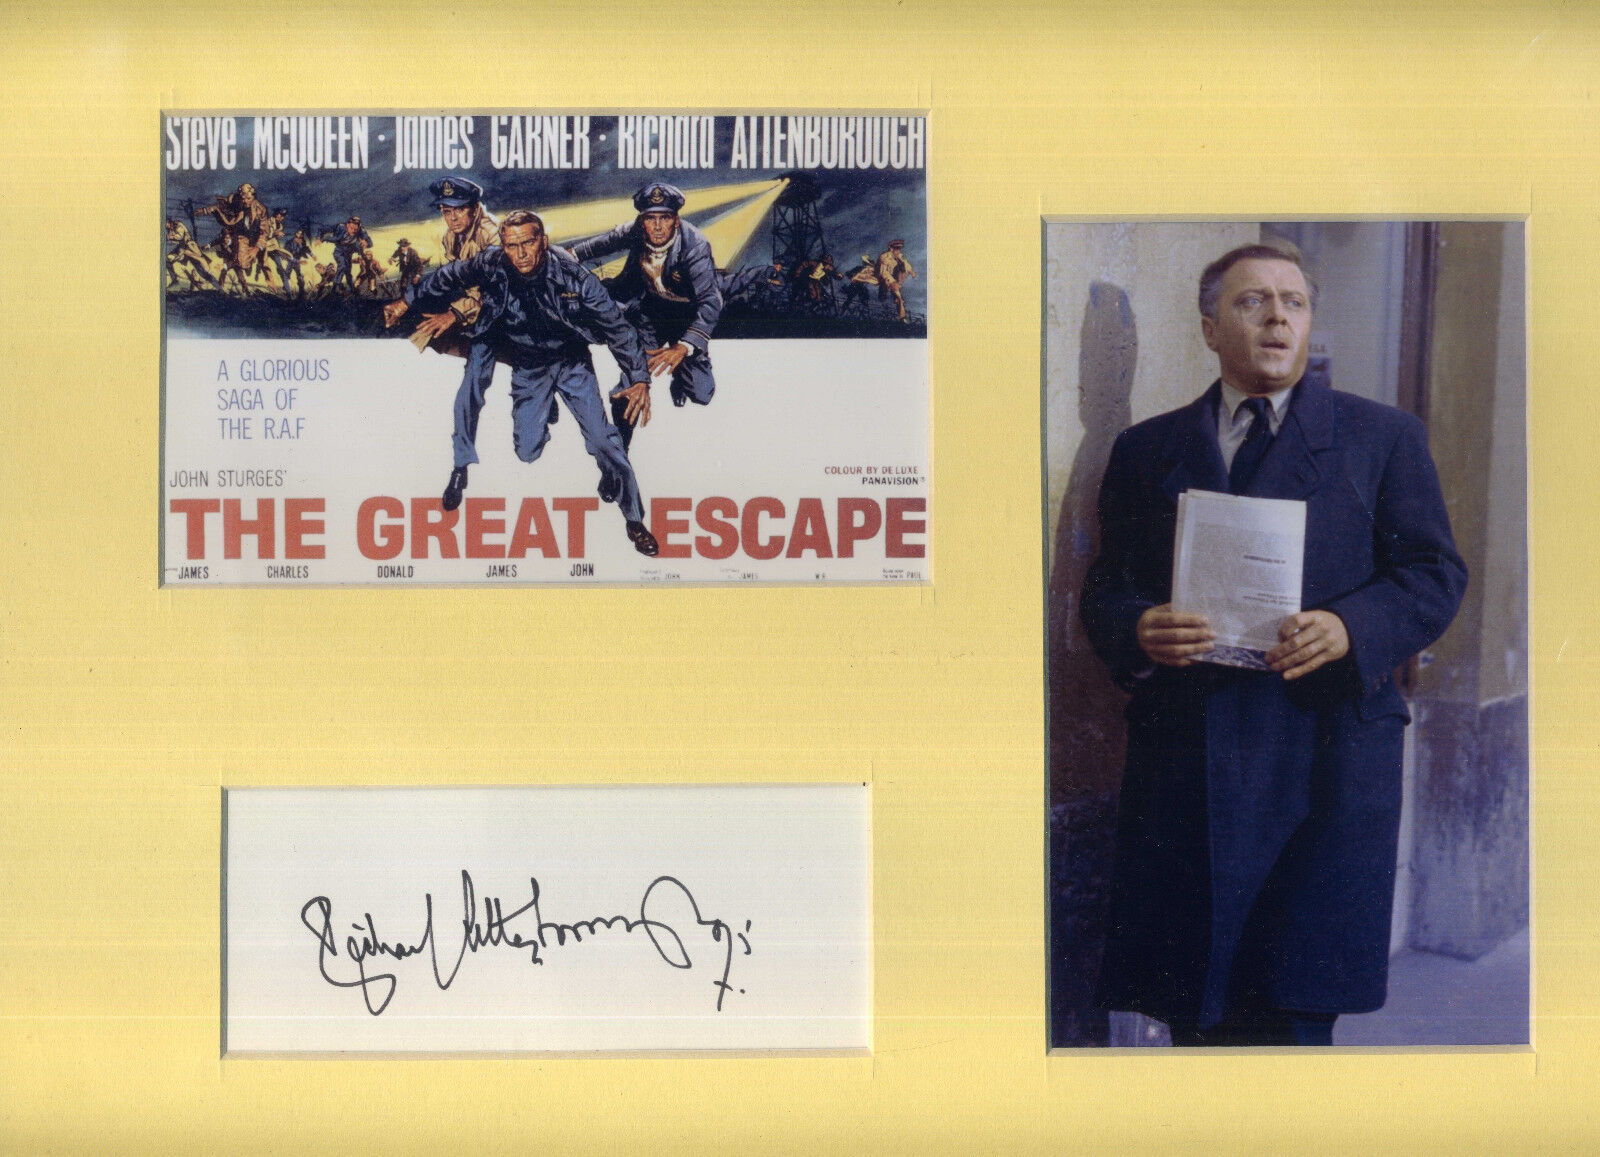 RICHARD ATTENBOROUGH Signed Photo Poster paintinggraph - Film Actor 'THE GREAT ESCAPE' preprint